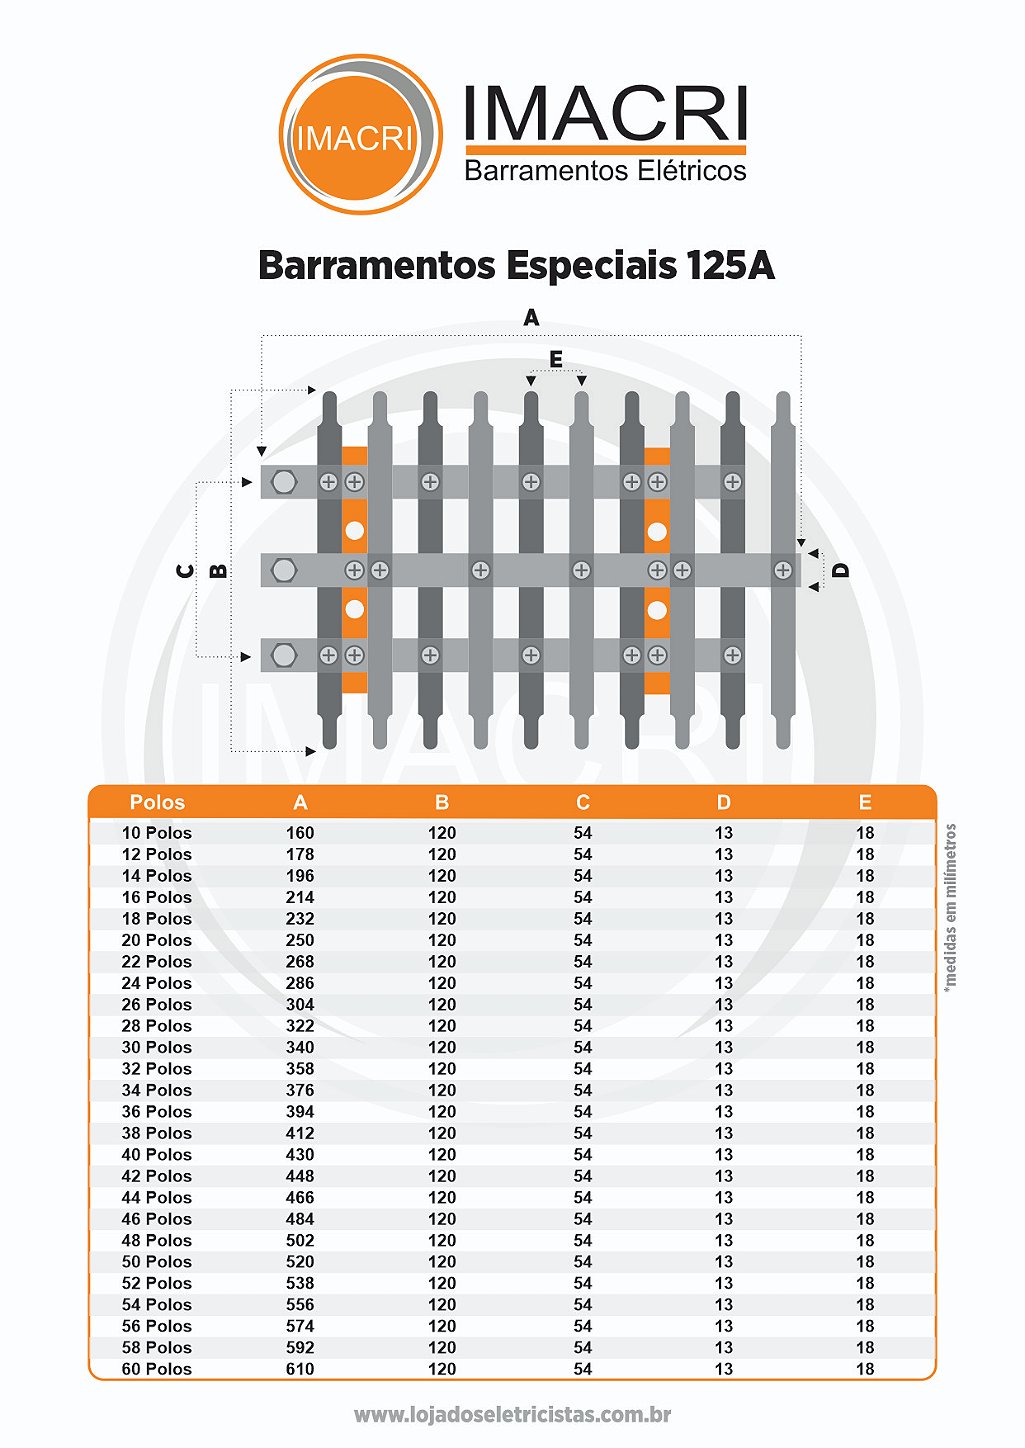 Barramento Trifásico Especial 125A - IMACRI - Barramentos Elétricos